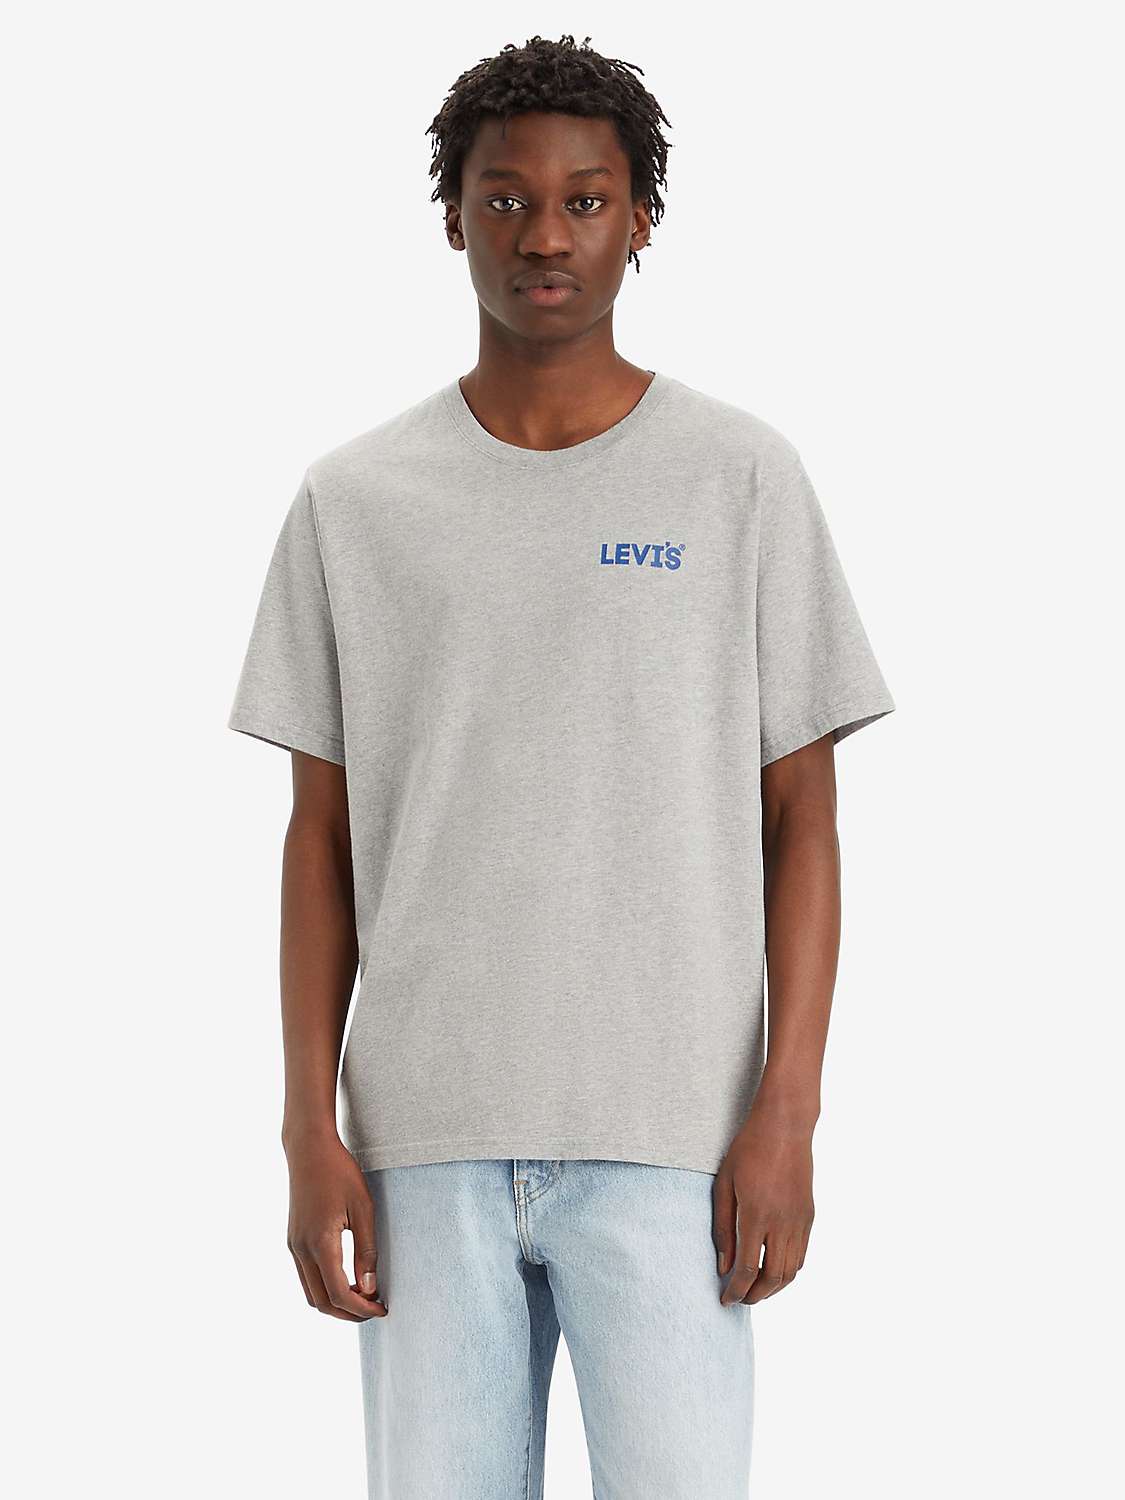 Buy Levi's Graphic Crew Neck T-Shirt, Grey Online at johnlewis.com